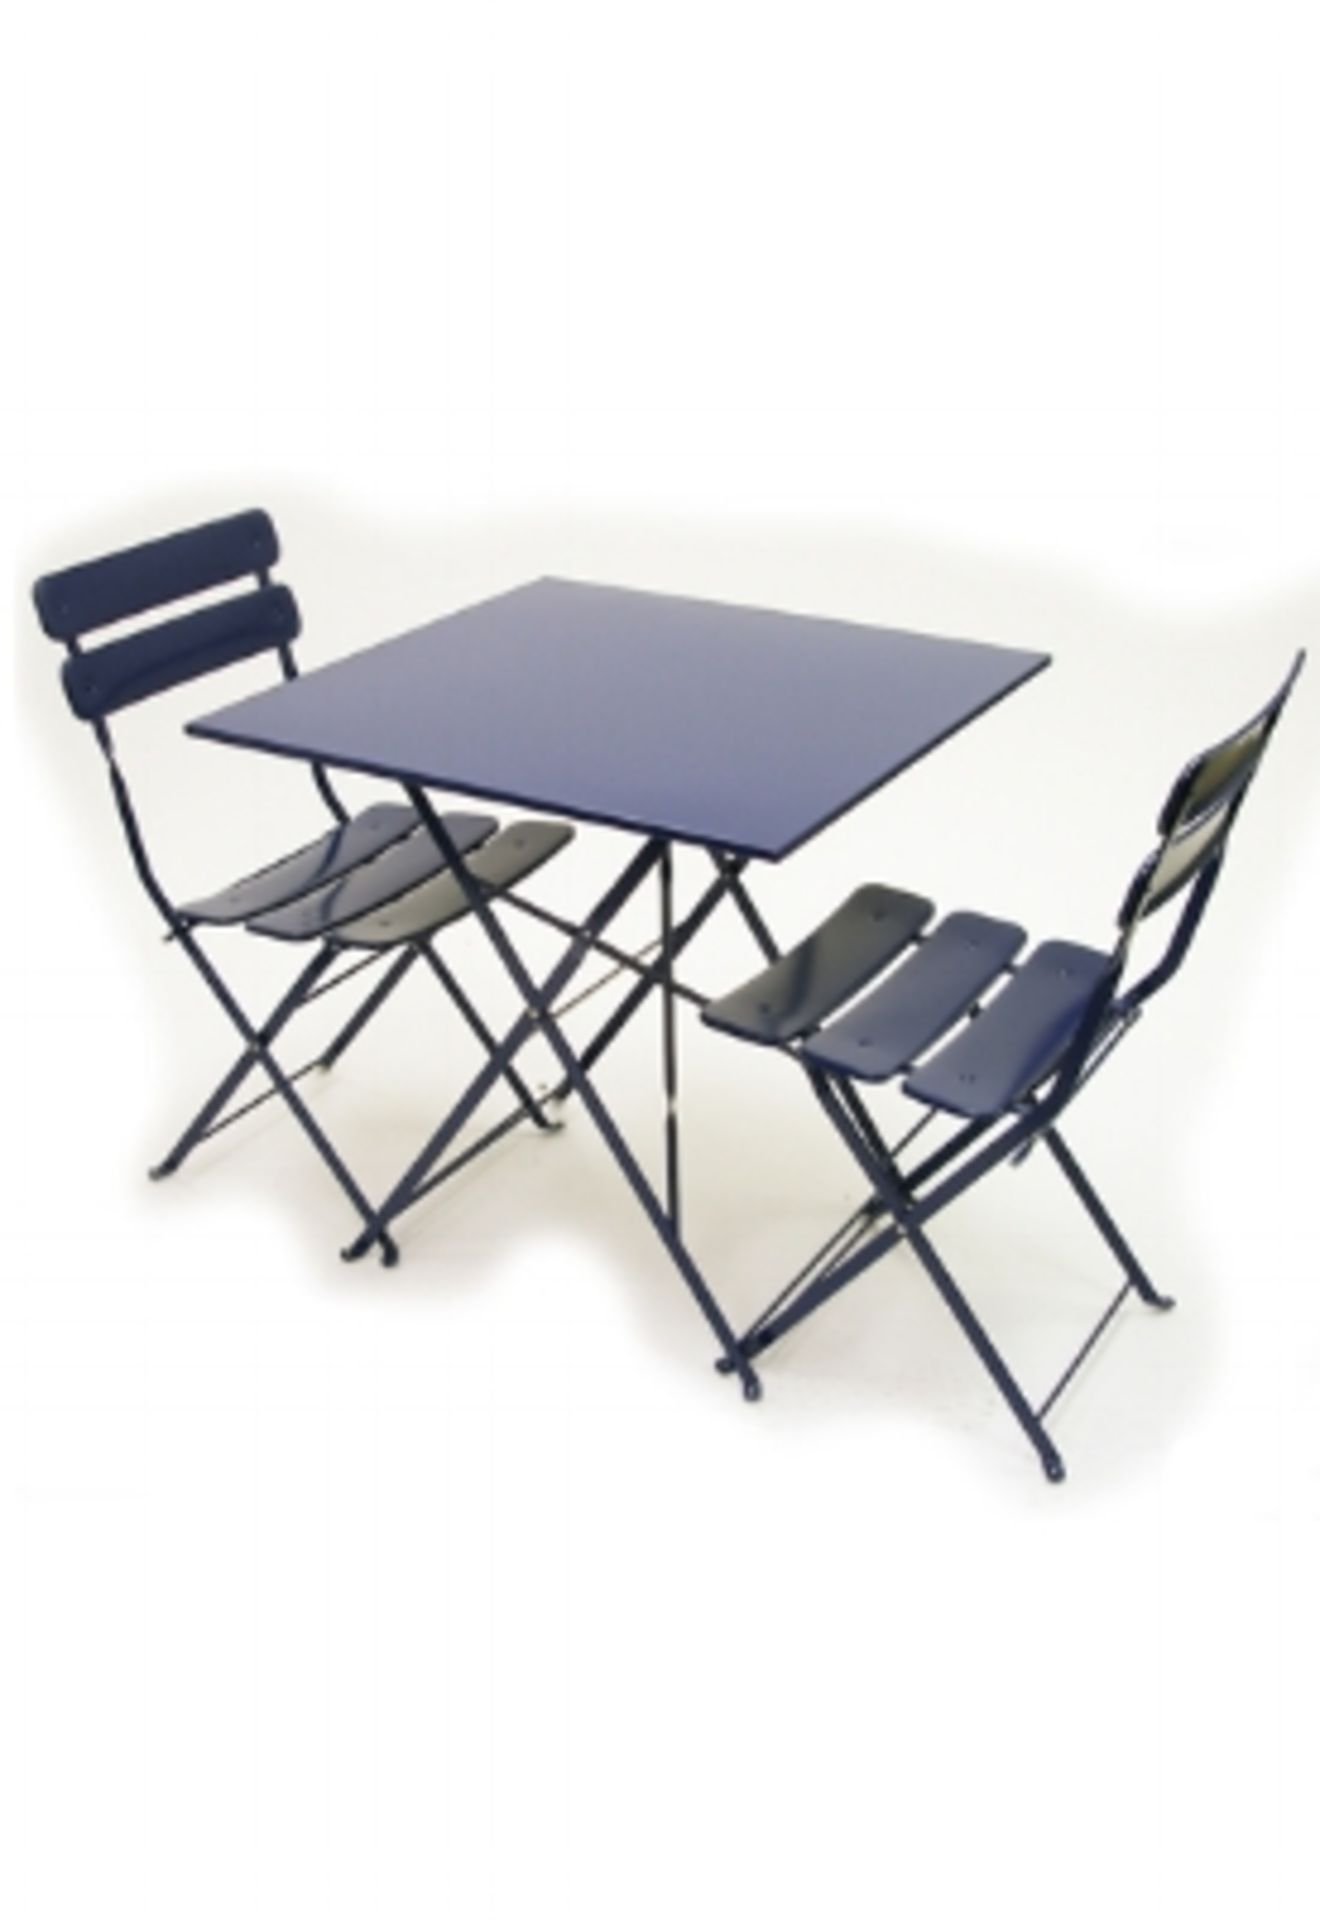 Jardin 28" Square Folding Table - Blue. ElectroZinc treated steel, powder coated. Dimensions: 28"